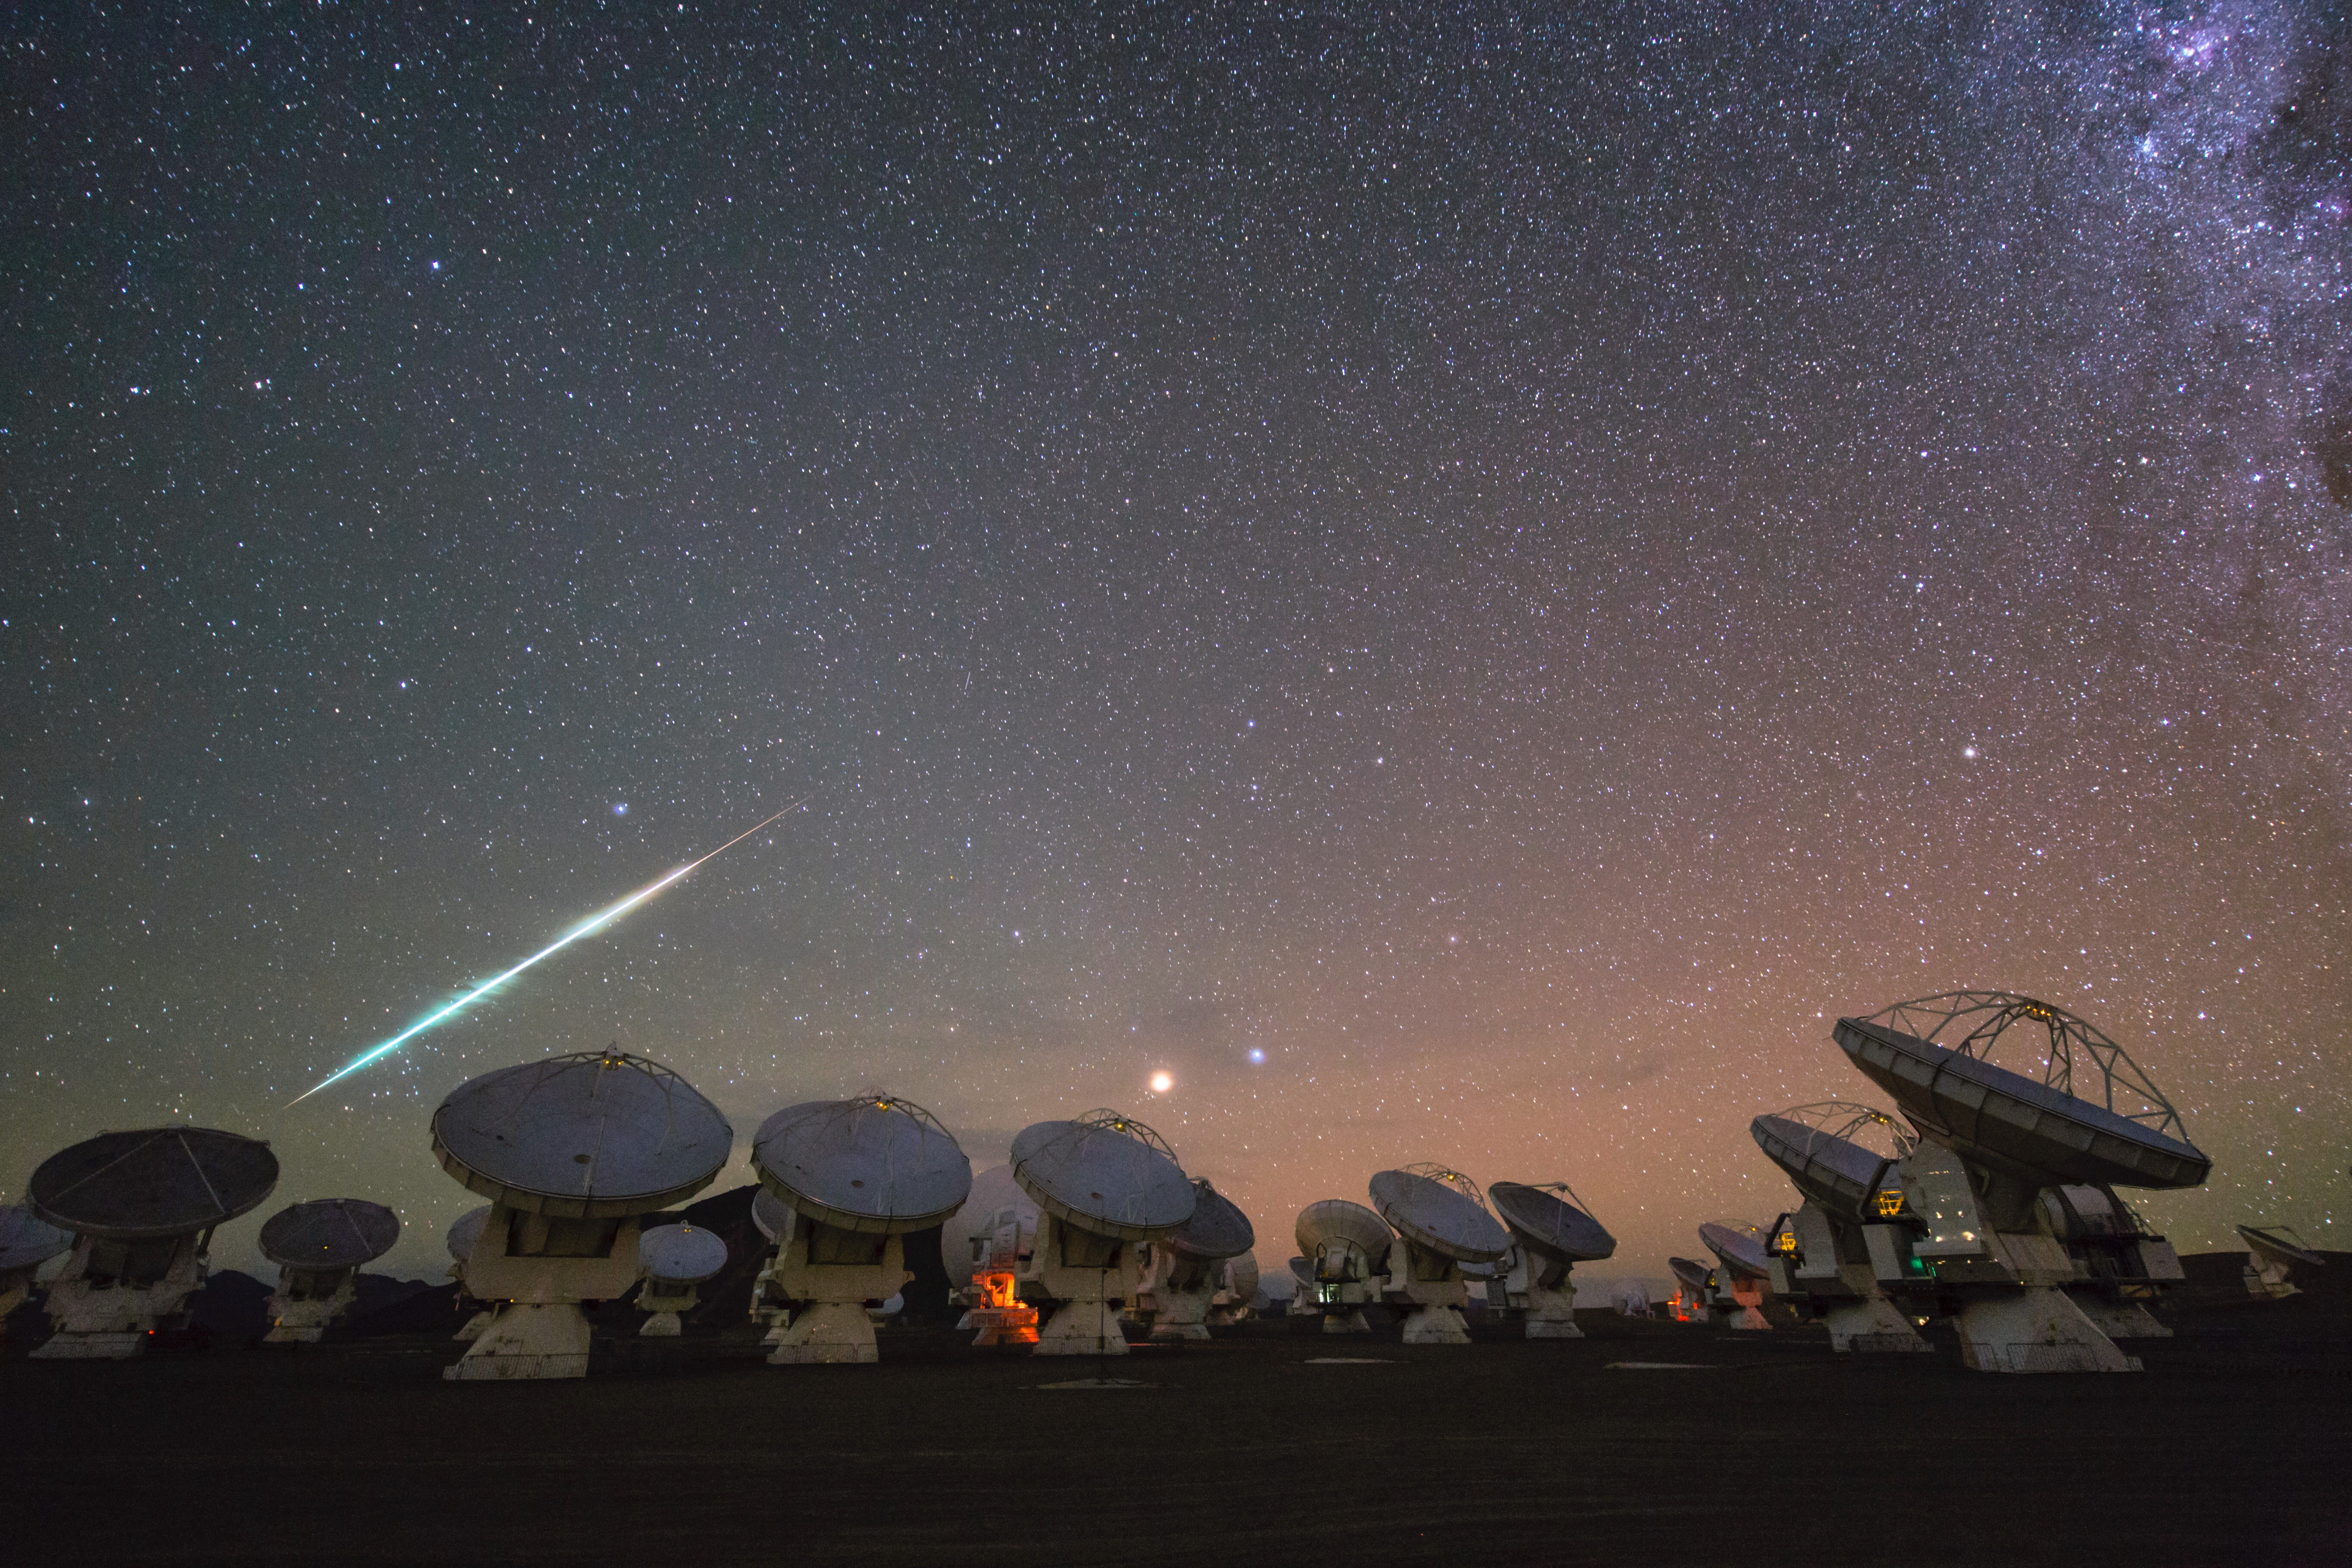 General 5472x3648 space universe stars ALMA Observatory meteors Atacama Desert sky outdoors South America